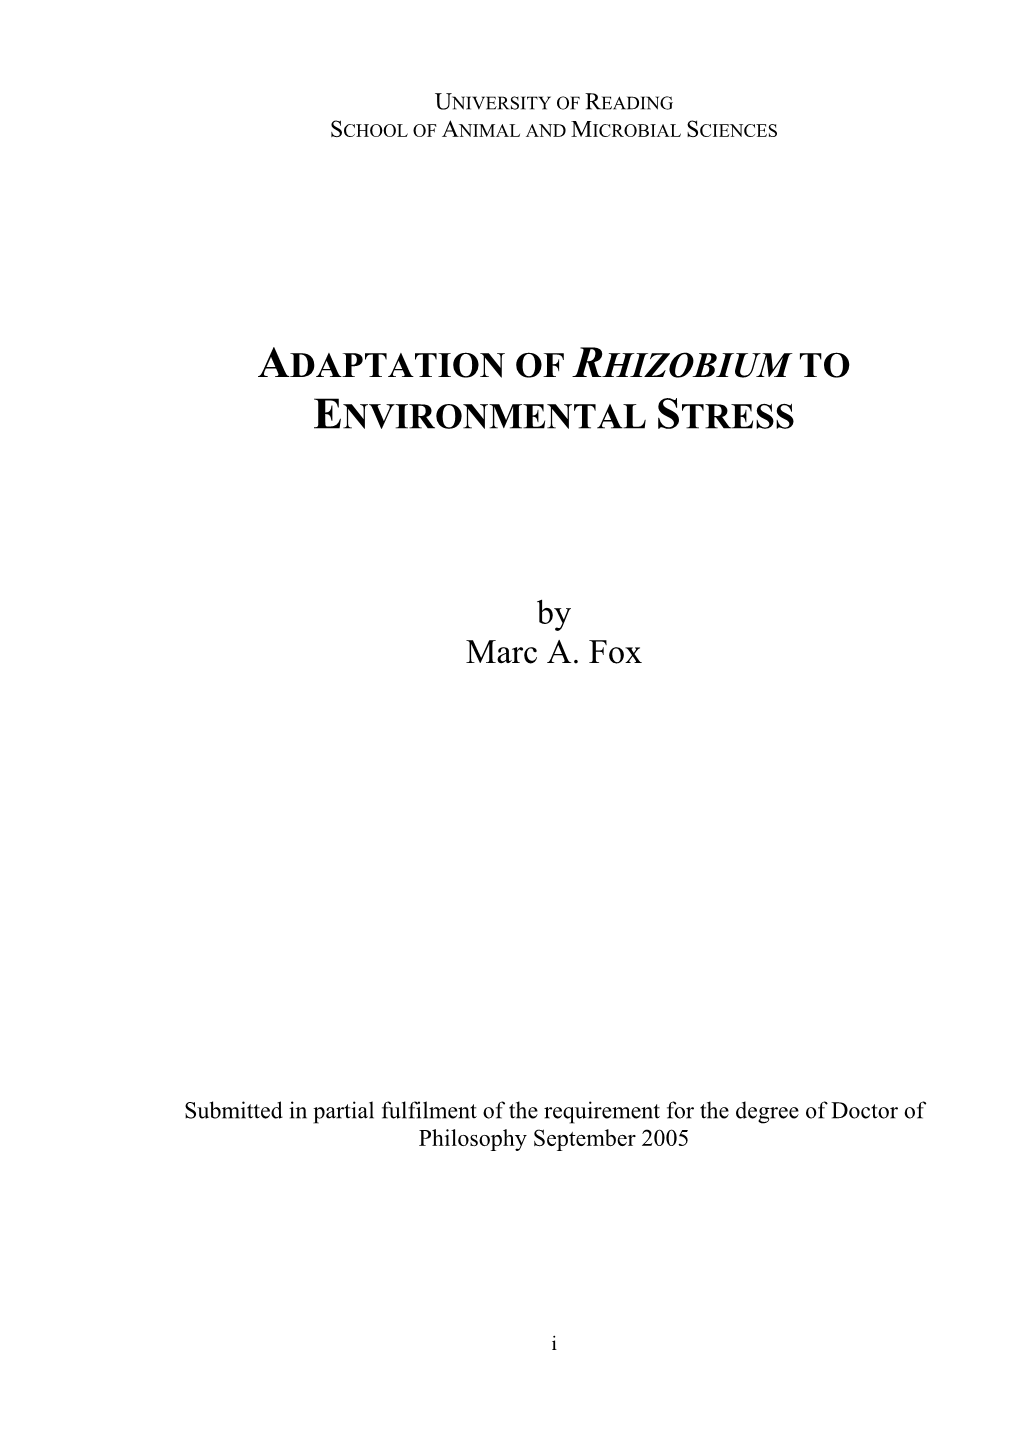 Adaptation of Rhizobium to Environmental Stress